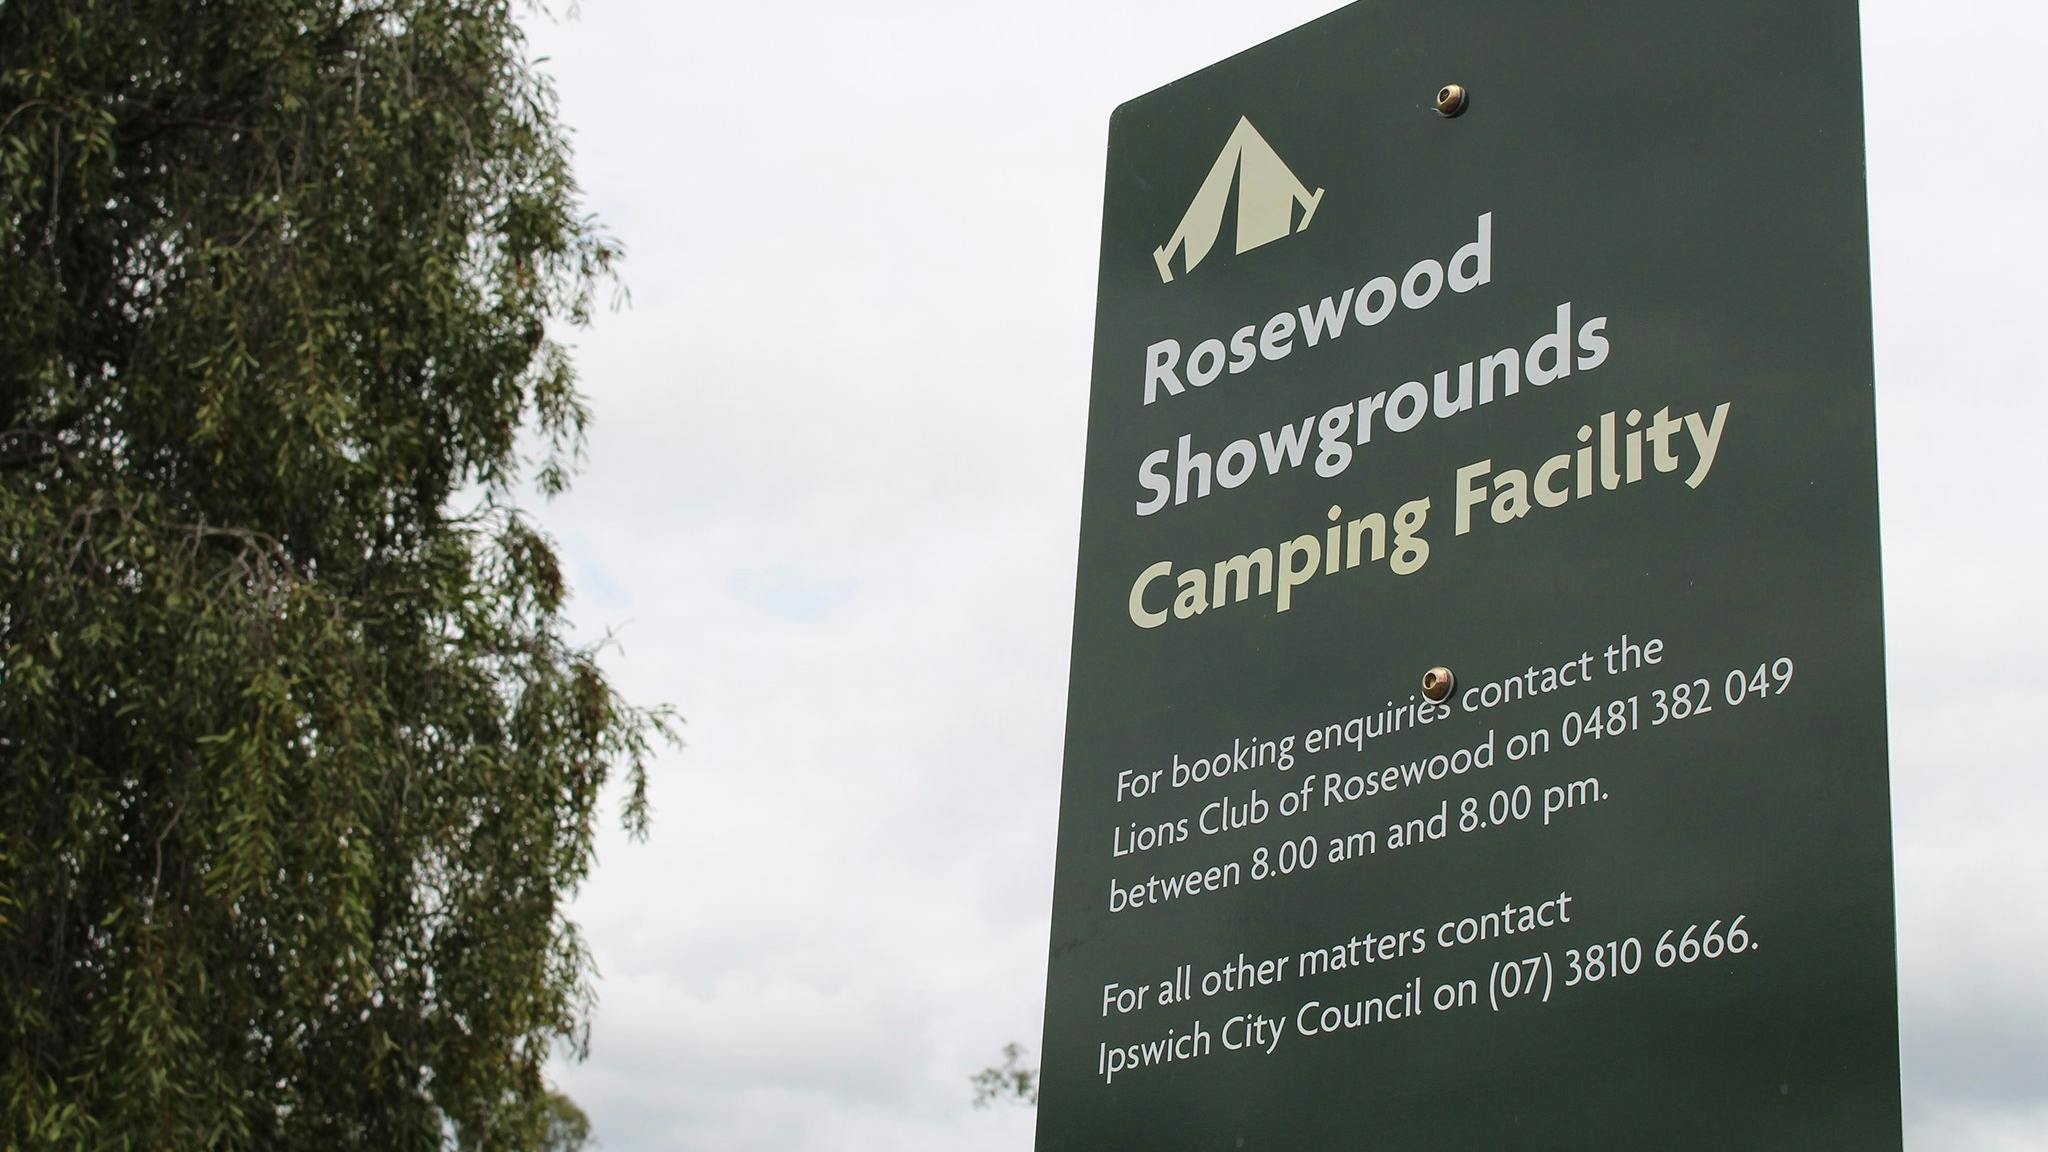 Rosewood Showgrounds Camping Facility